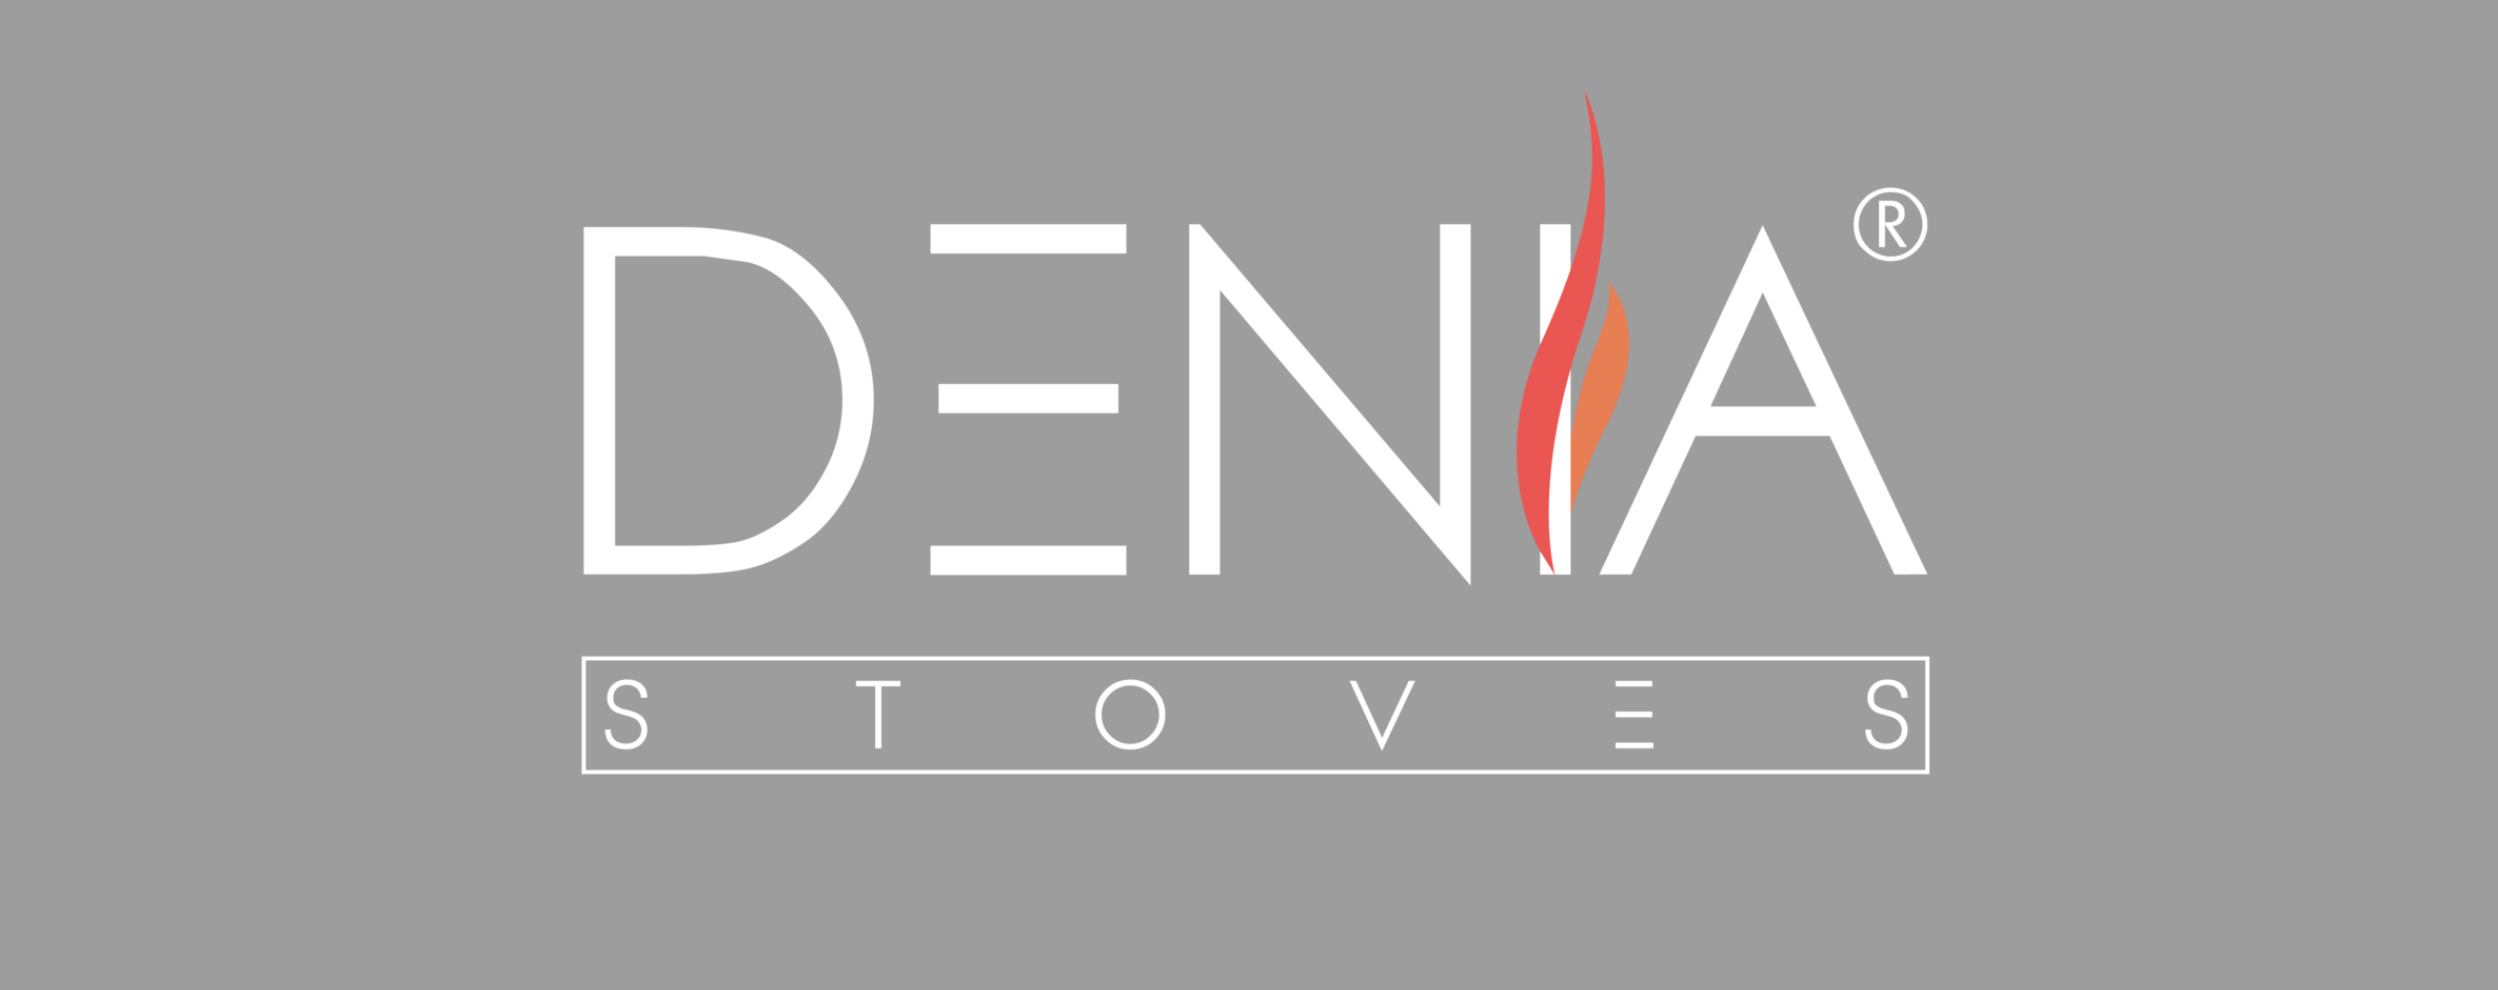 Denia Stove presents its products at Expobiomasa